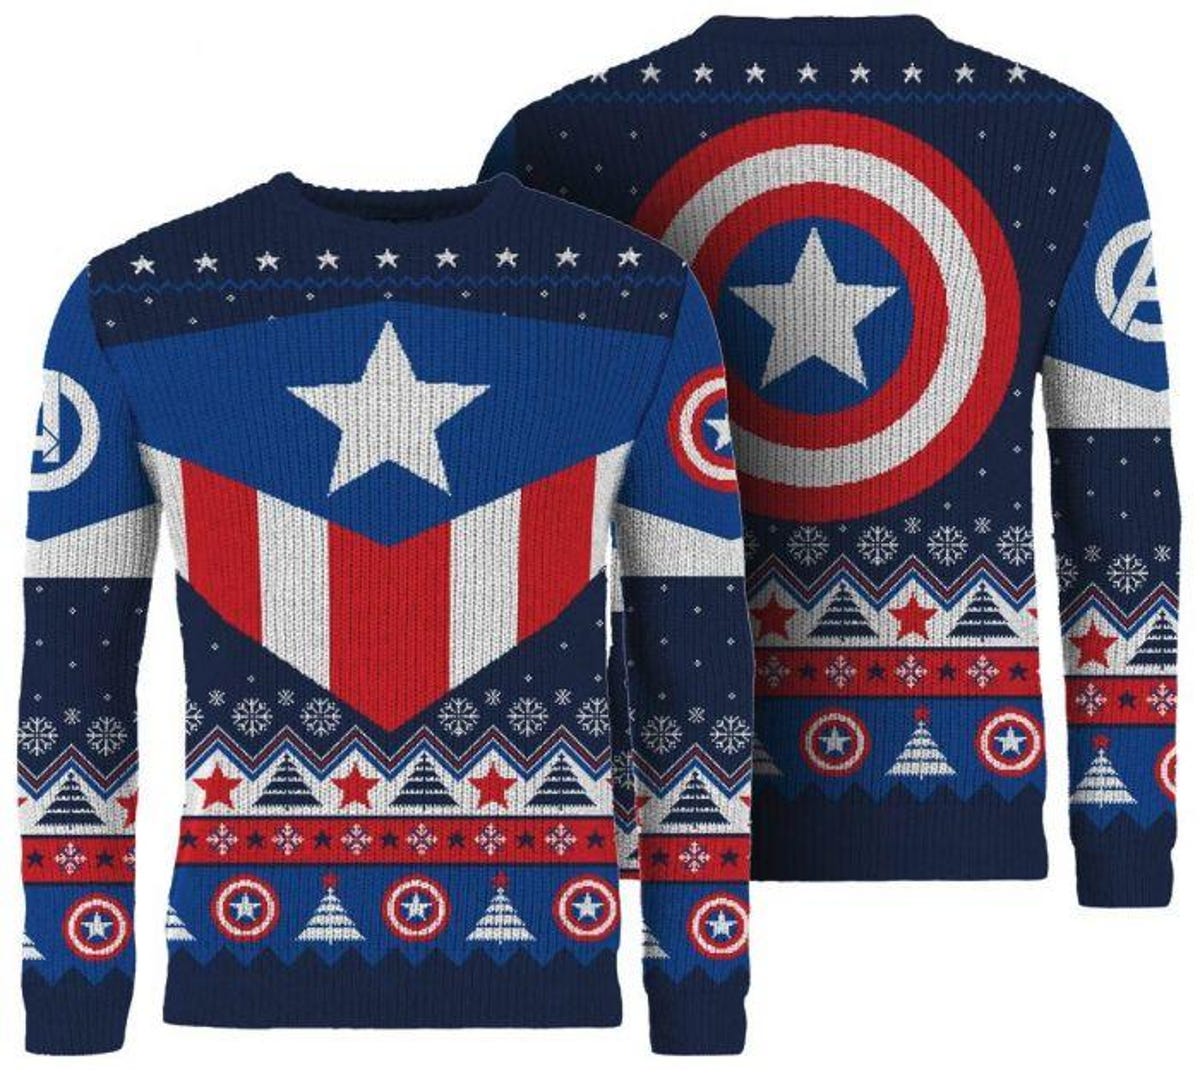 Captain America uniform sweater